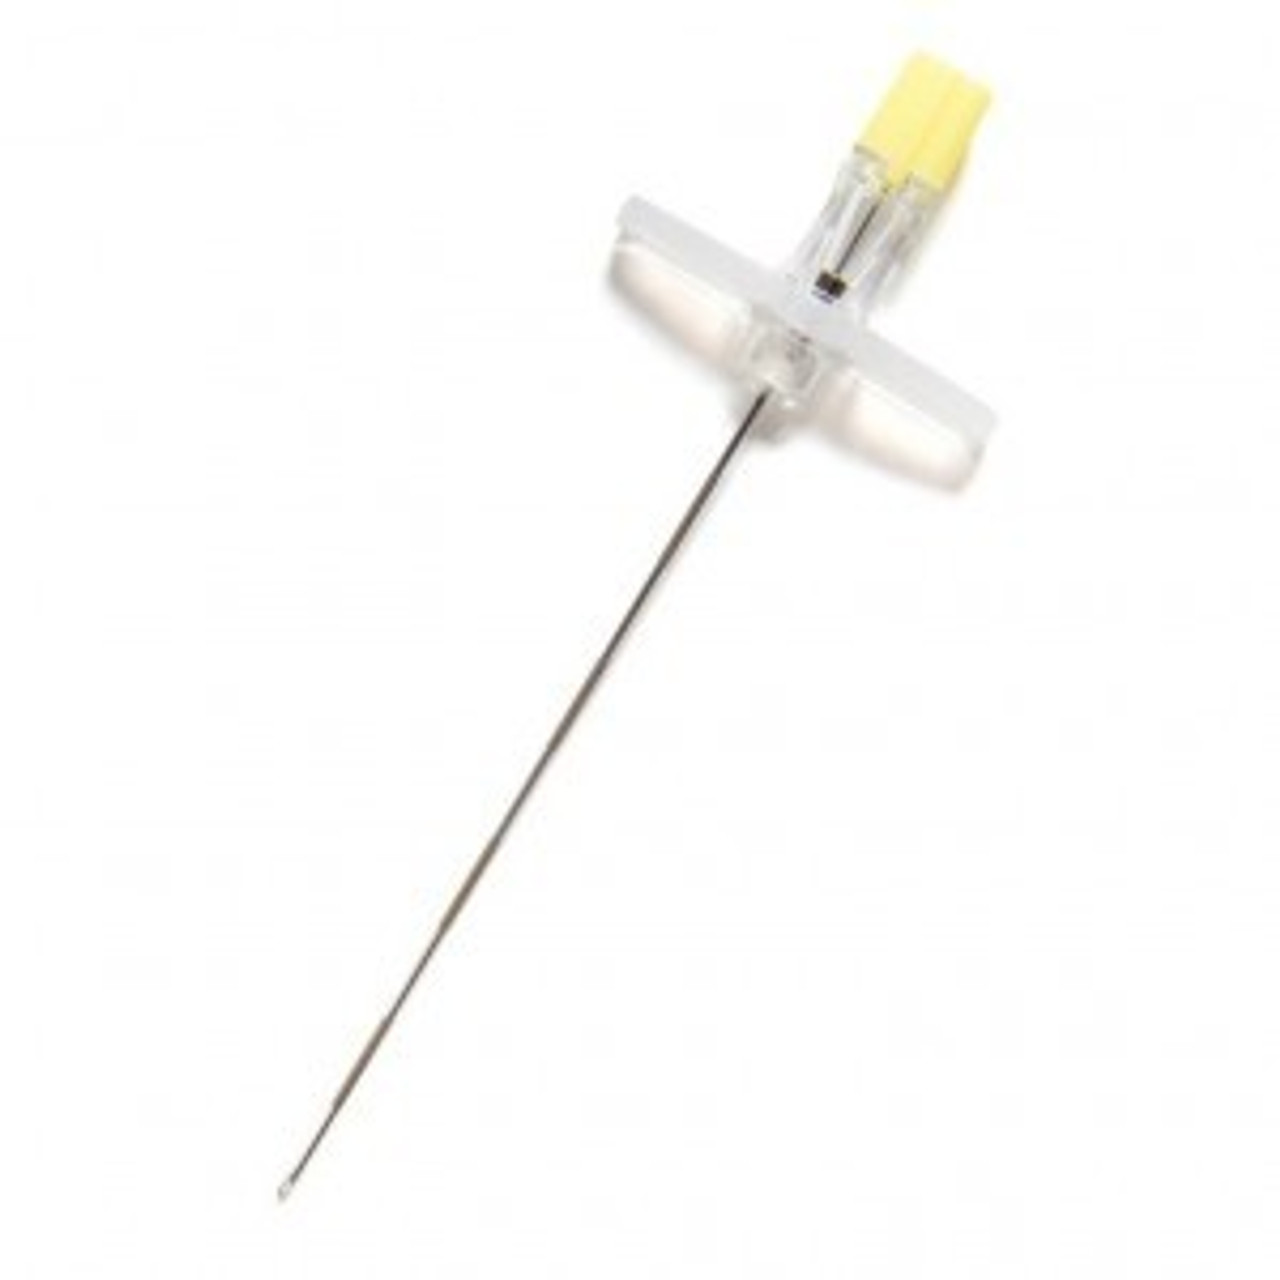 Avanos Tuohy Epidural Needle, 18G x 3 1/2", Plastic Hub, Sterile, 25/bx